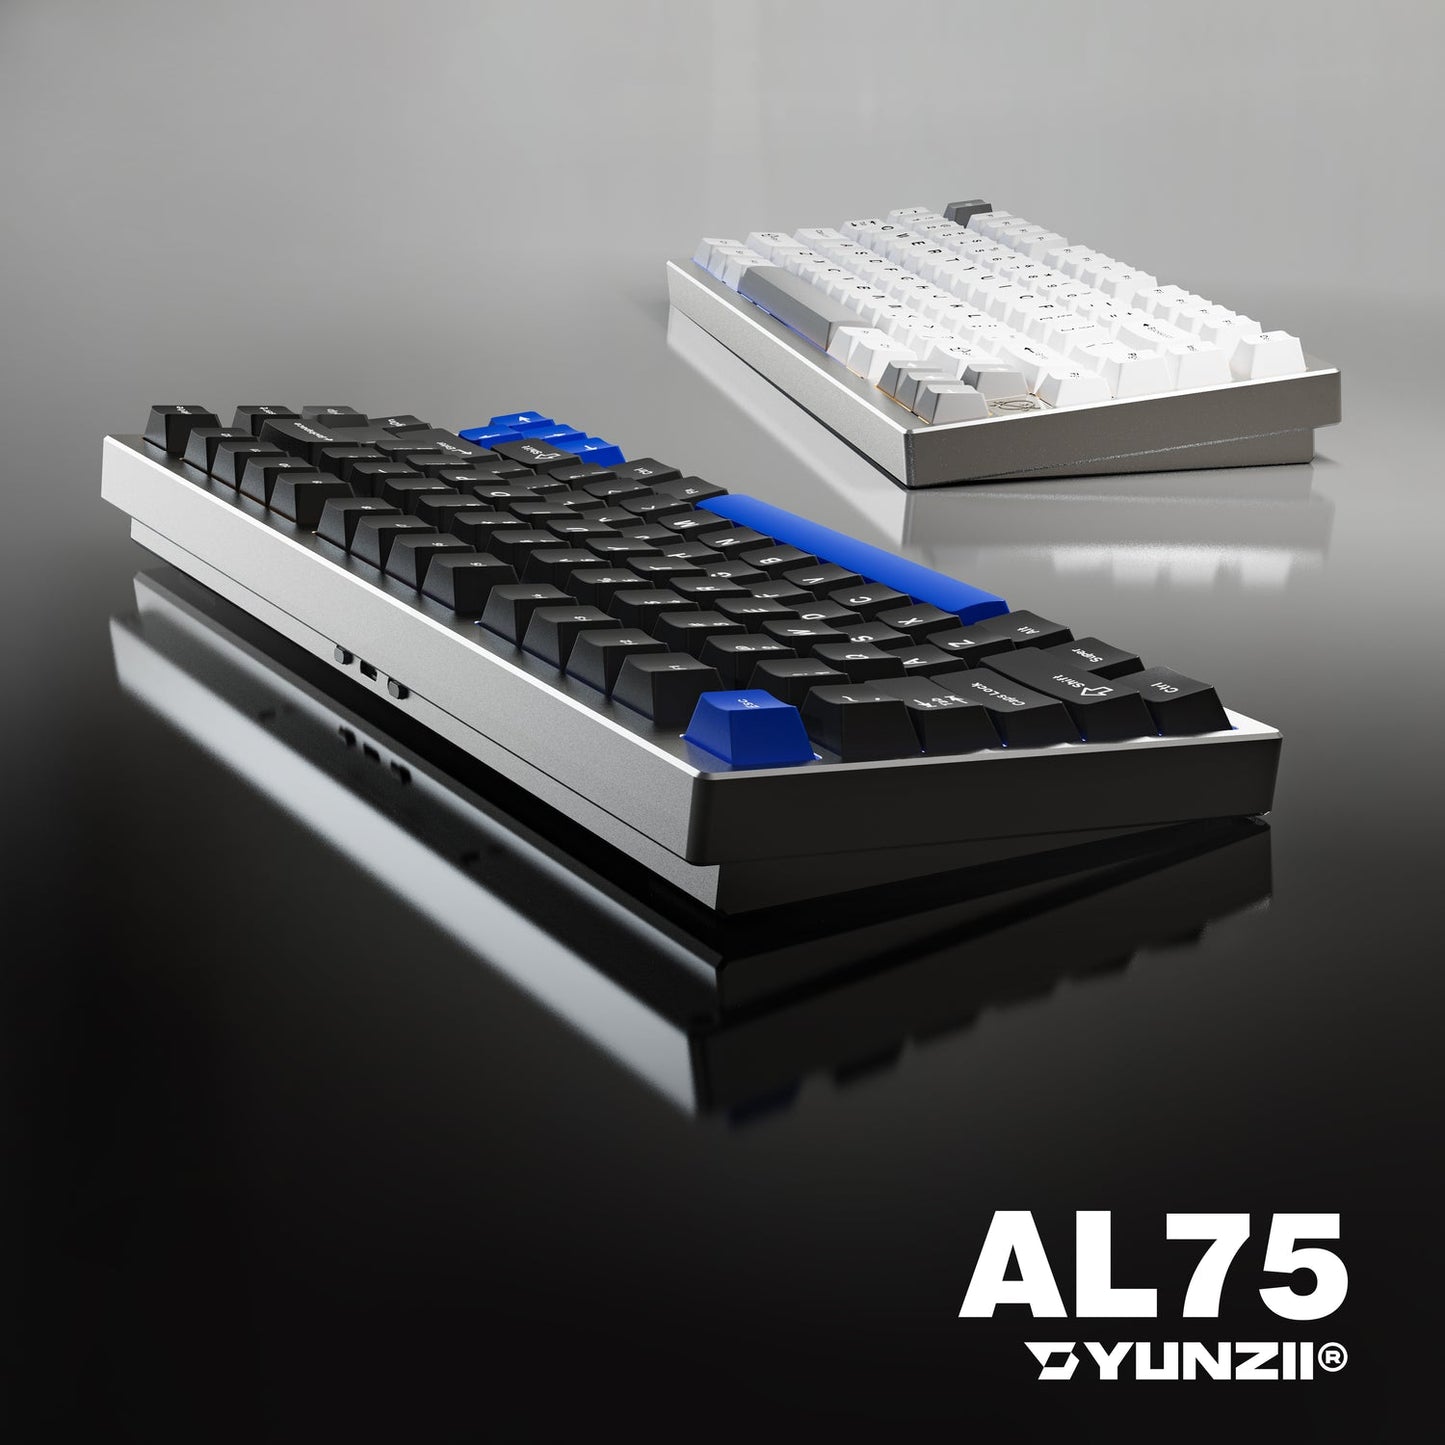 Yunzii AL75 Aluminum Mechanical Keyboard - Black